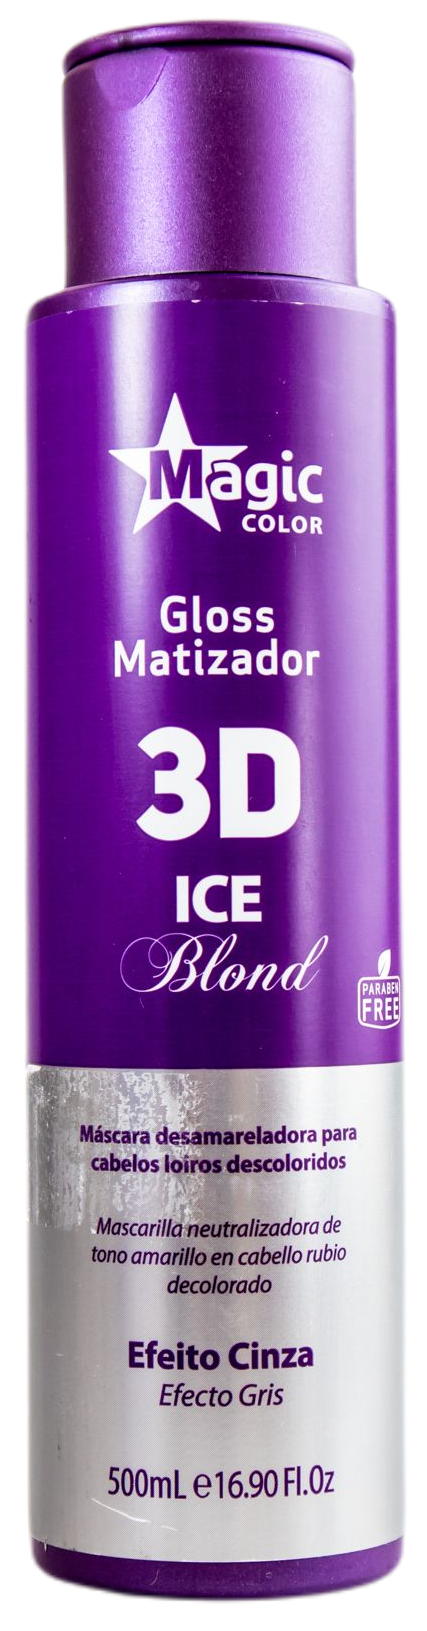 Magic Color Brazilian Keratin Treatment Brazilian Treatment Gray Effect Ice Blond 3D Tinting Gloss 500ml - Magic Color